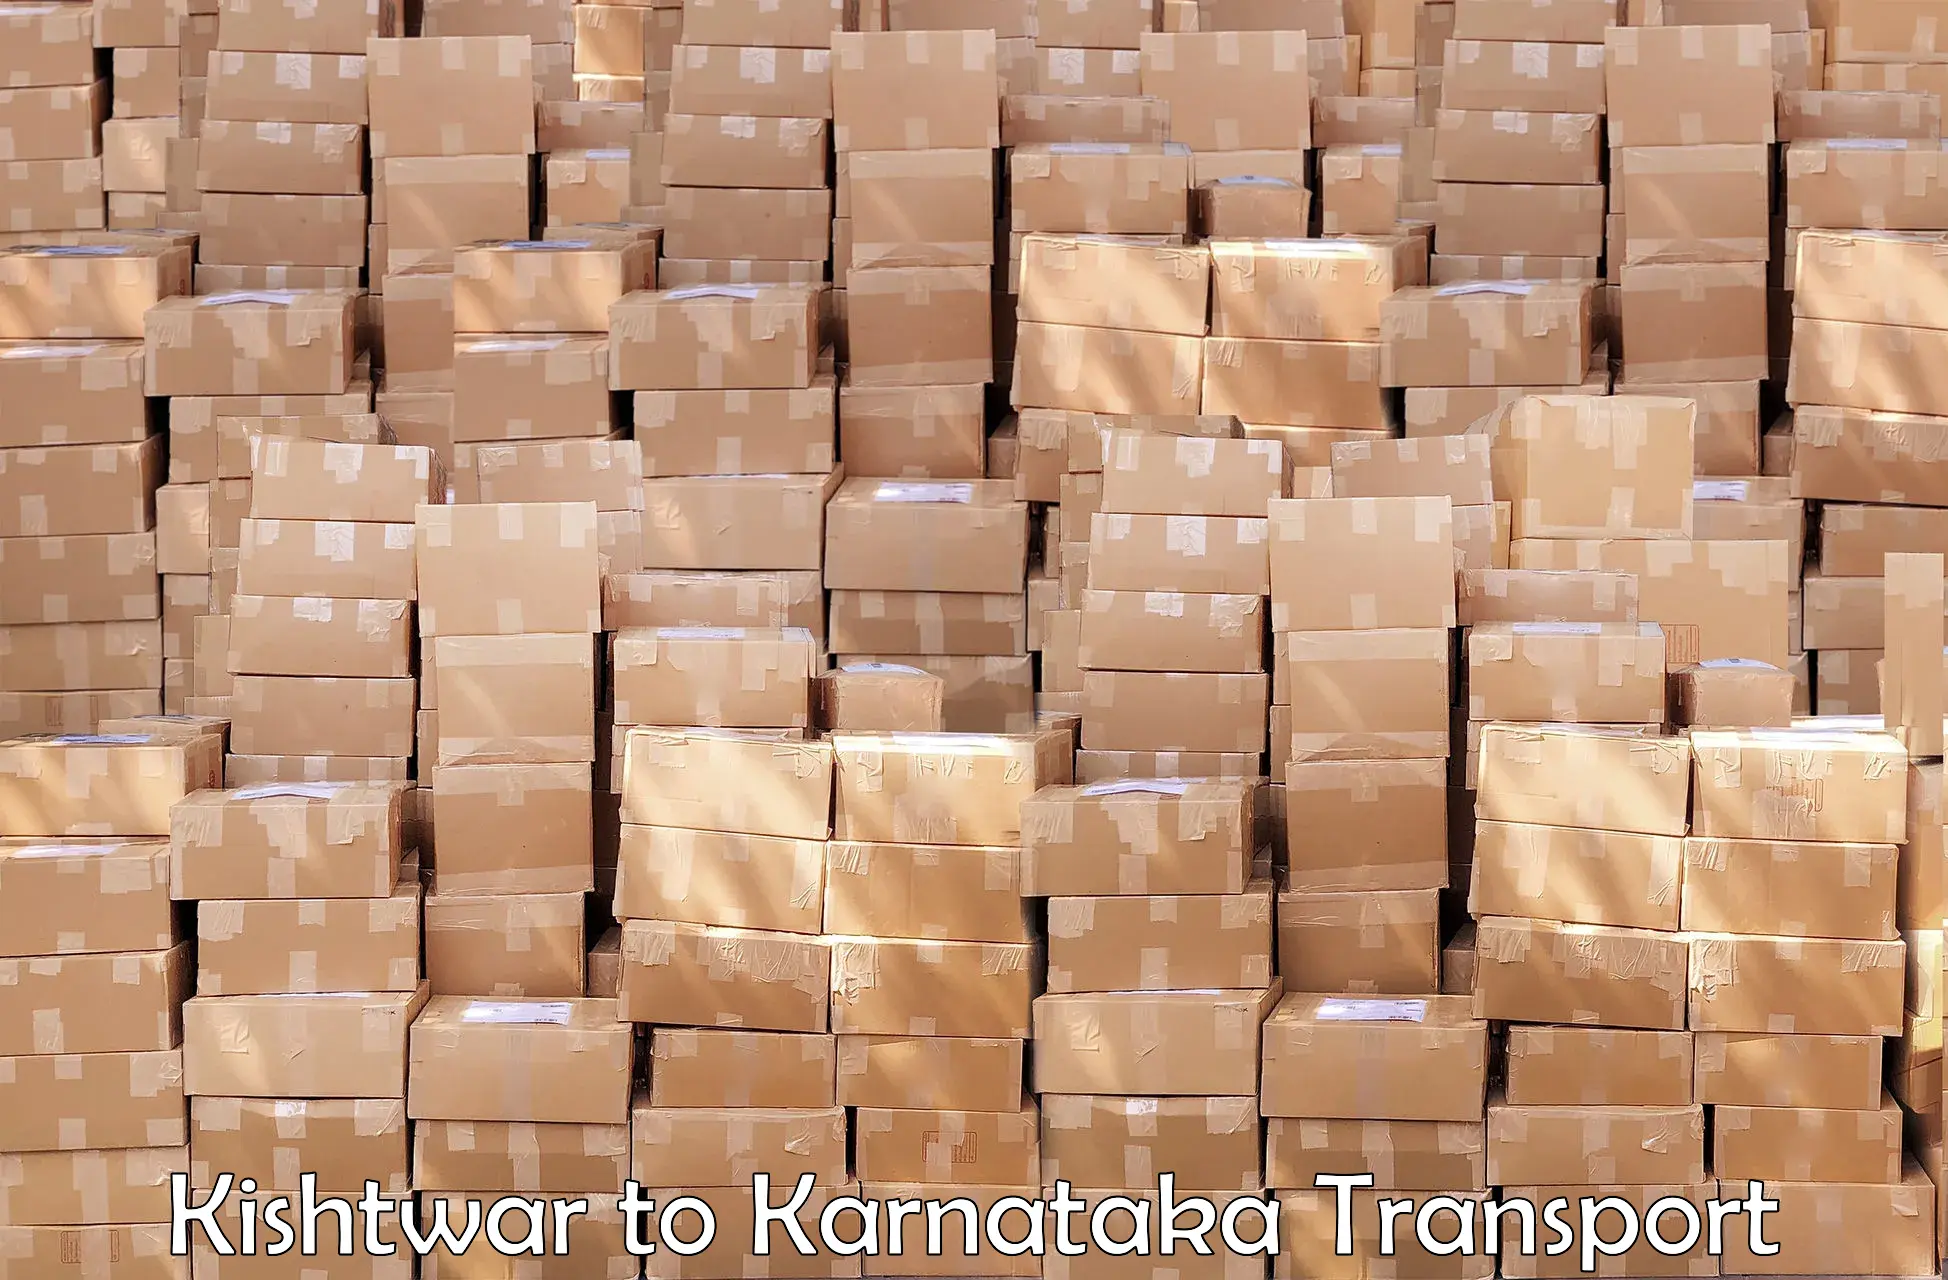 Goods delivery service Kishtwar to Bangalore